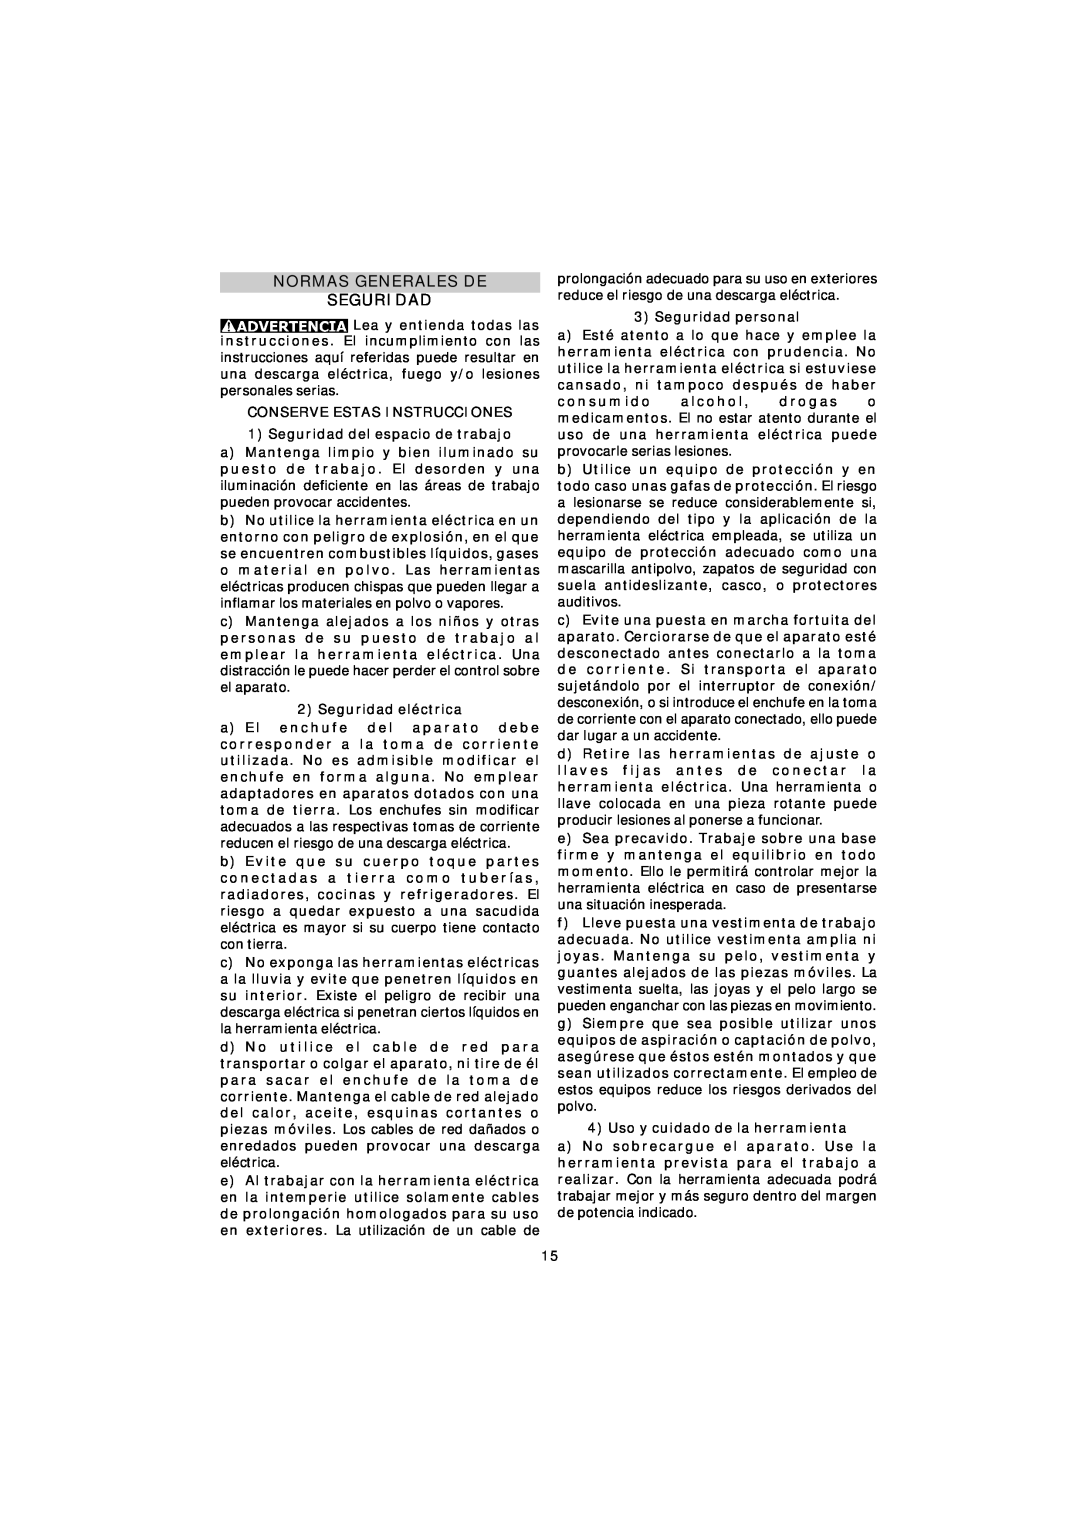 Festool RO 150 E instruction manual Normas Generales De Seguridad 